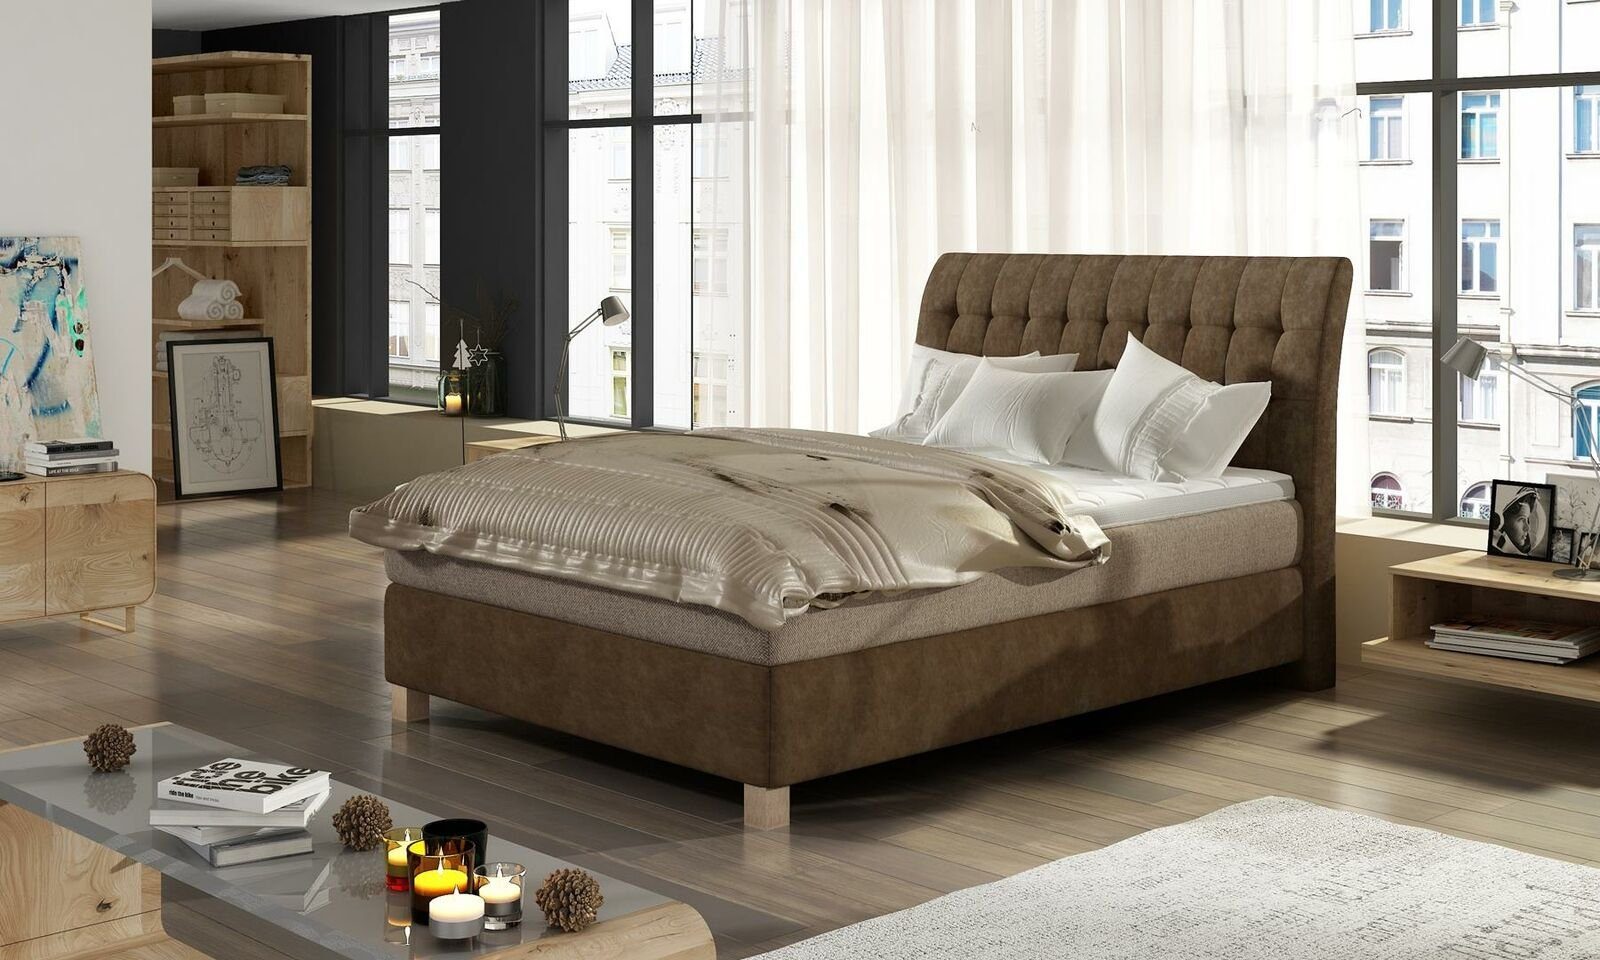 JVmoebel Bett, Design Betten 140x200cm Doppel Bett Möbel Einrichtung Schlafzimmer Braun